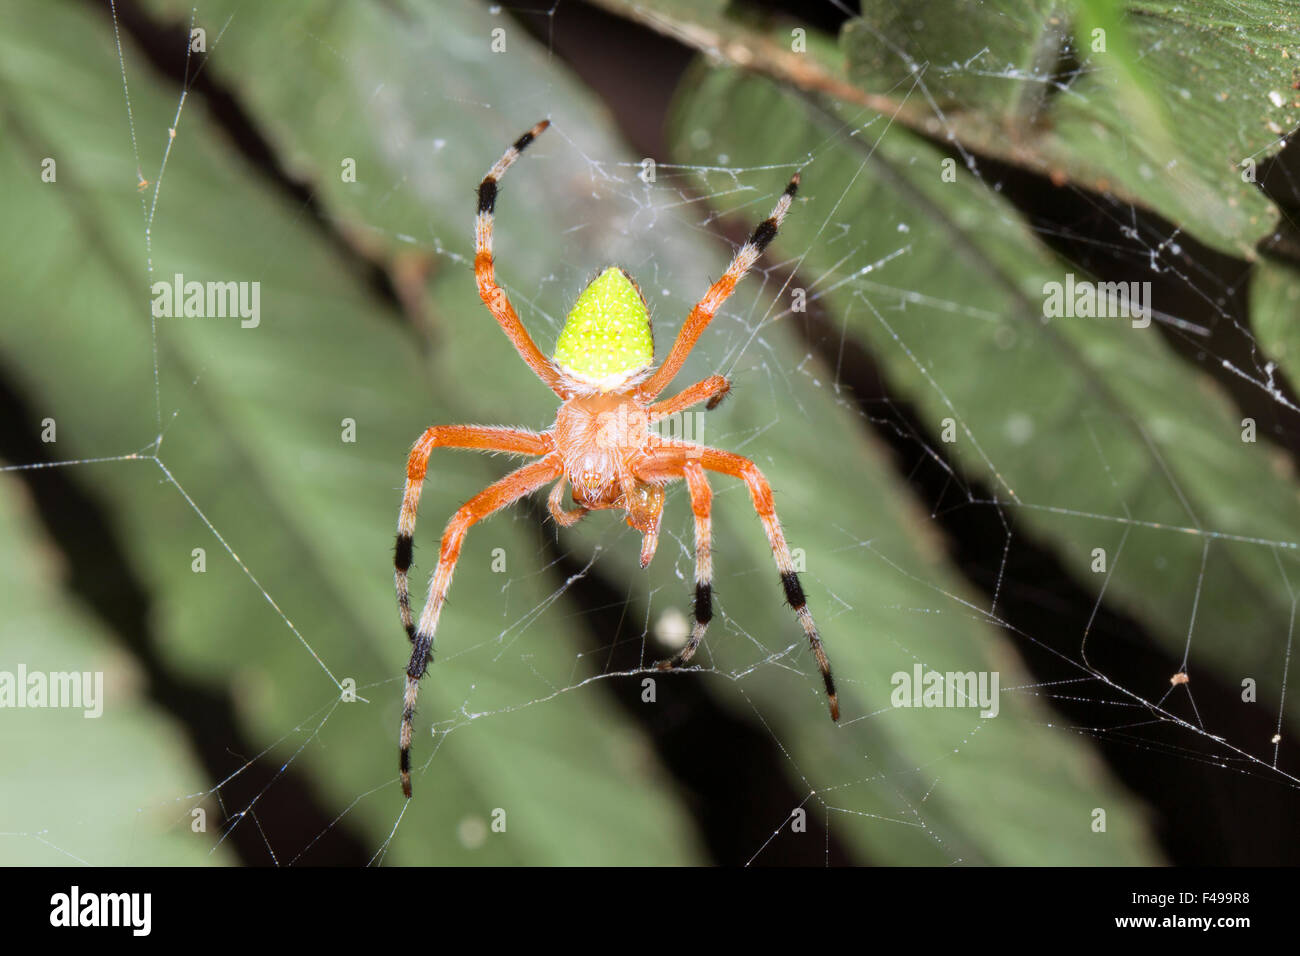 Bunte Spinne in einem Netz im Regenwald Ecuadors Stockfotografie - Alamy